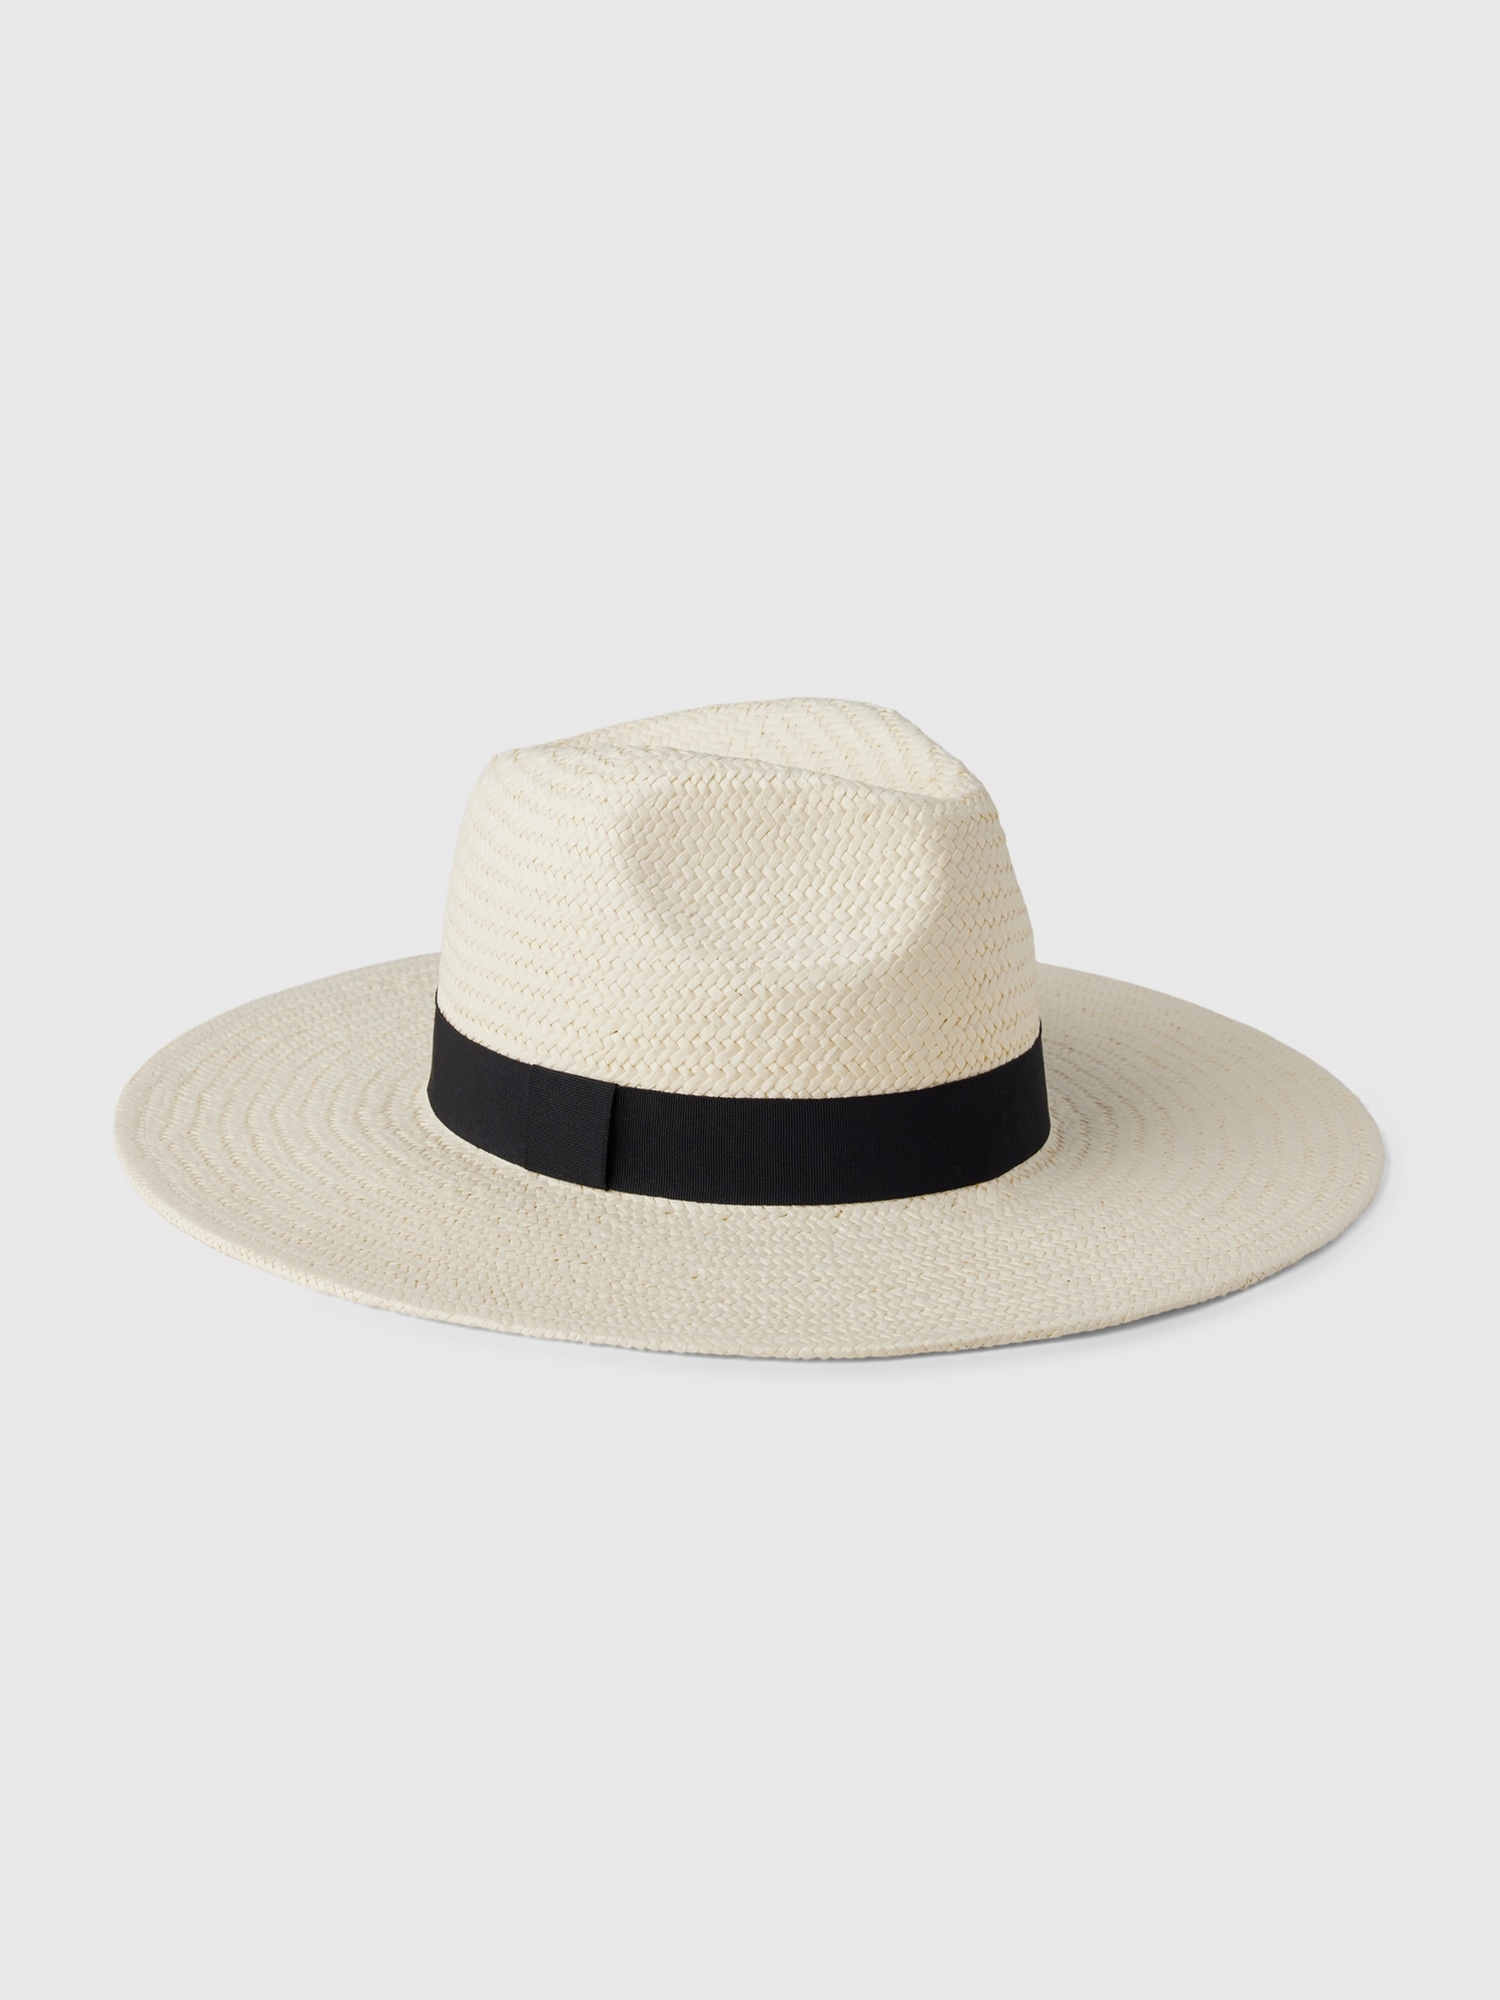 Gap Straw Panama Hat In Cream